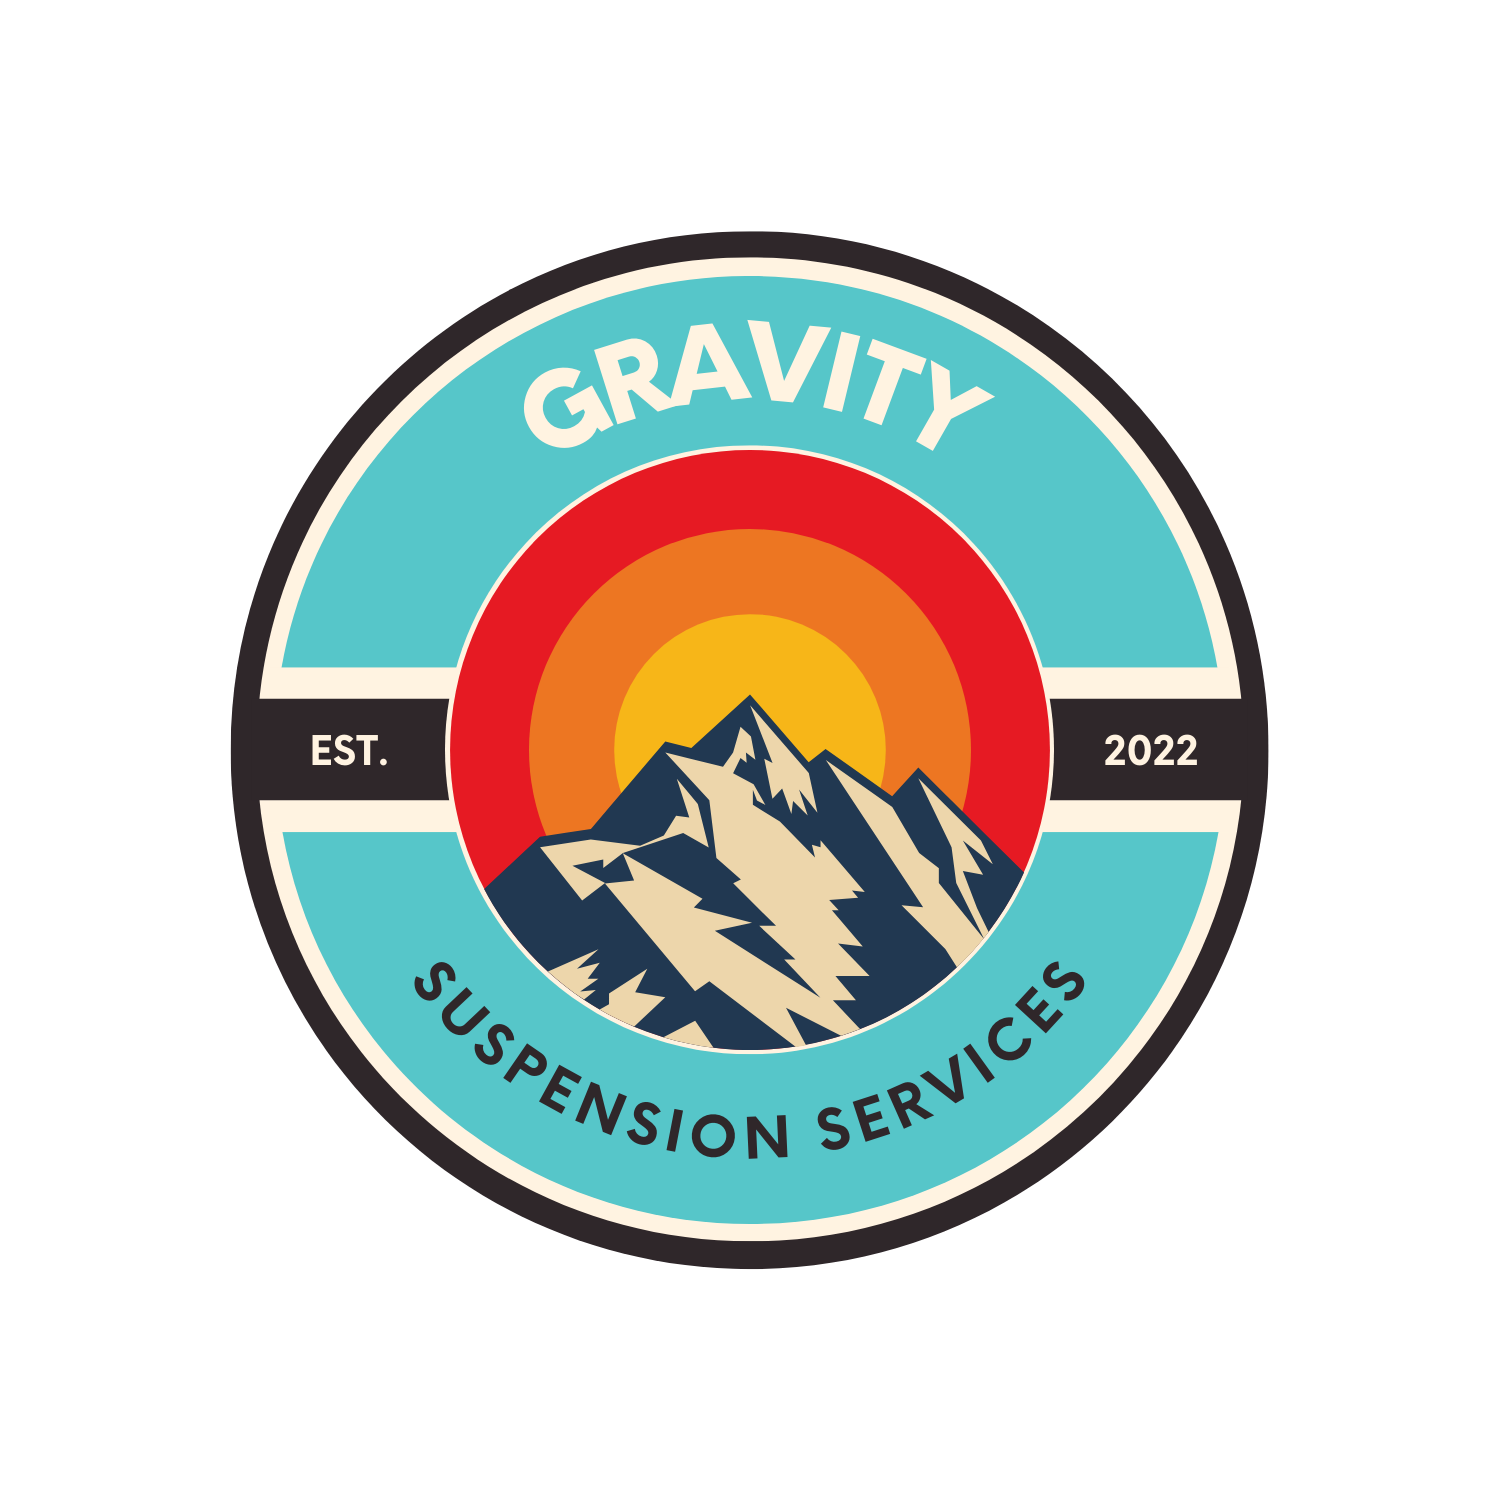 Gravity Suspension Services